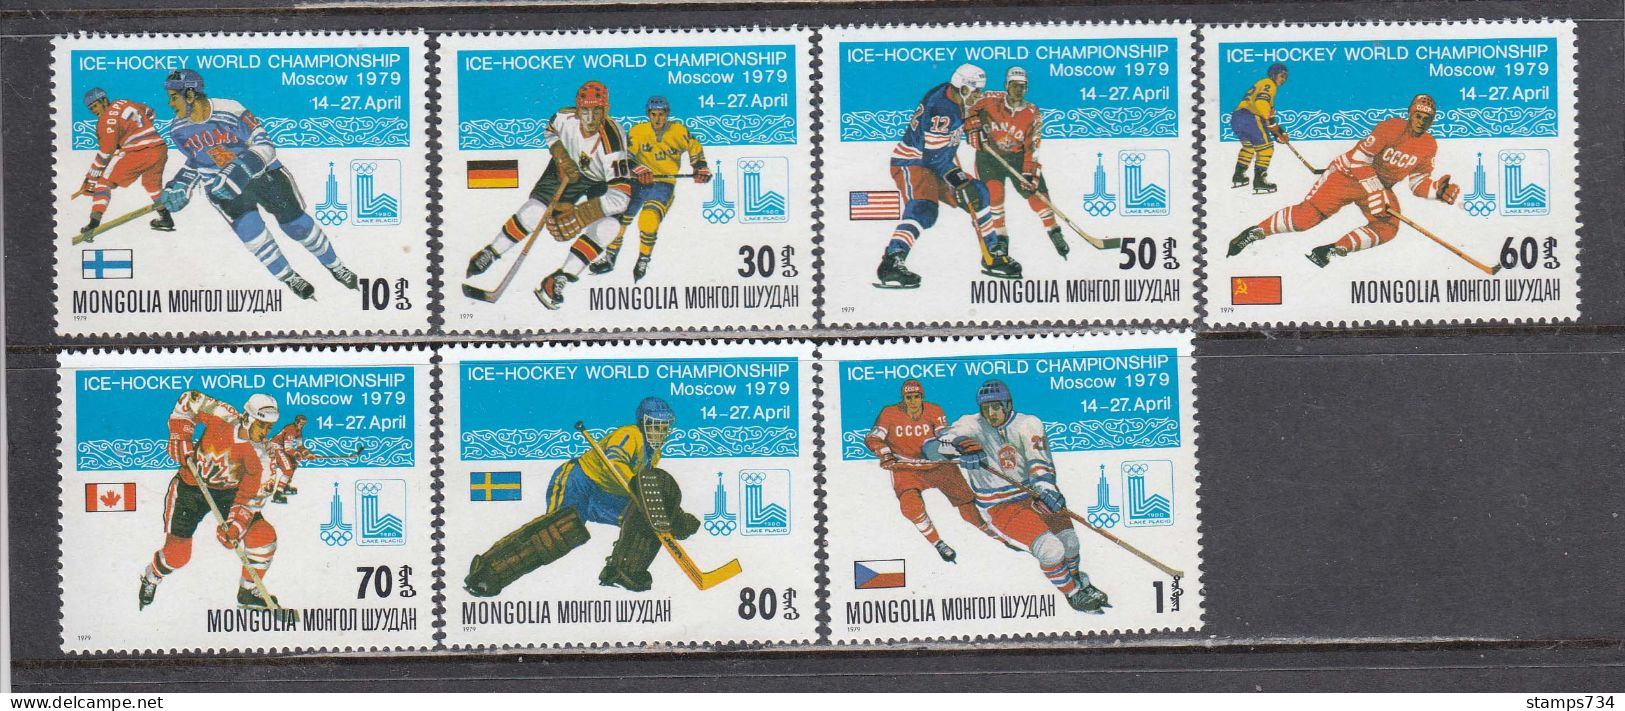 Mongolia 1979 - Ice Hockey World Championship, Moscow, Mi-Nr. 1215/21, MNH** - Mongolia